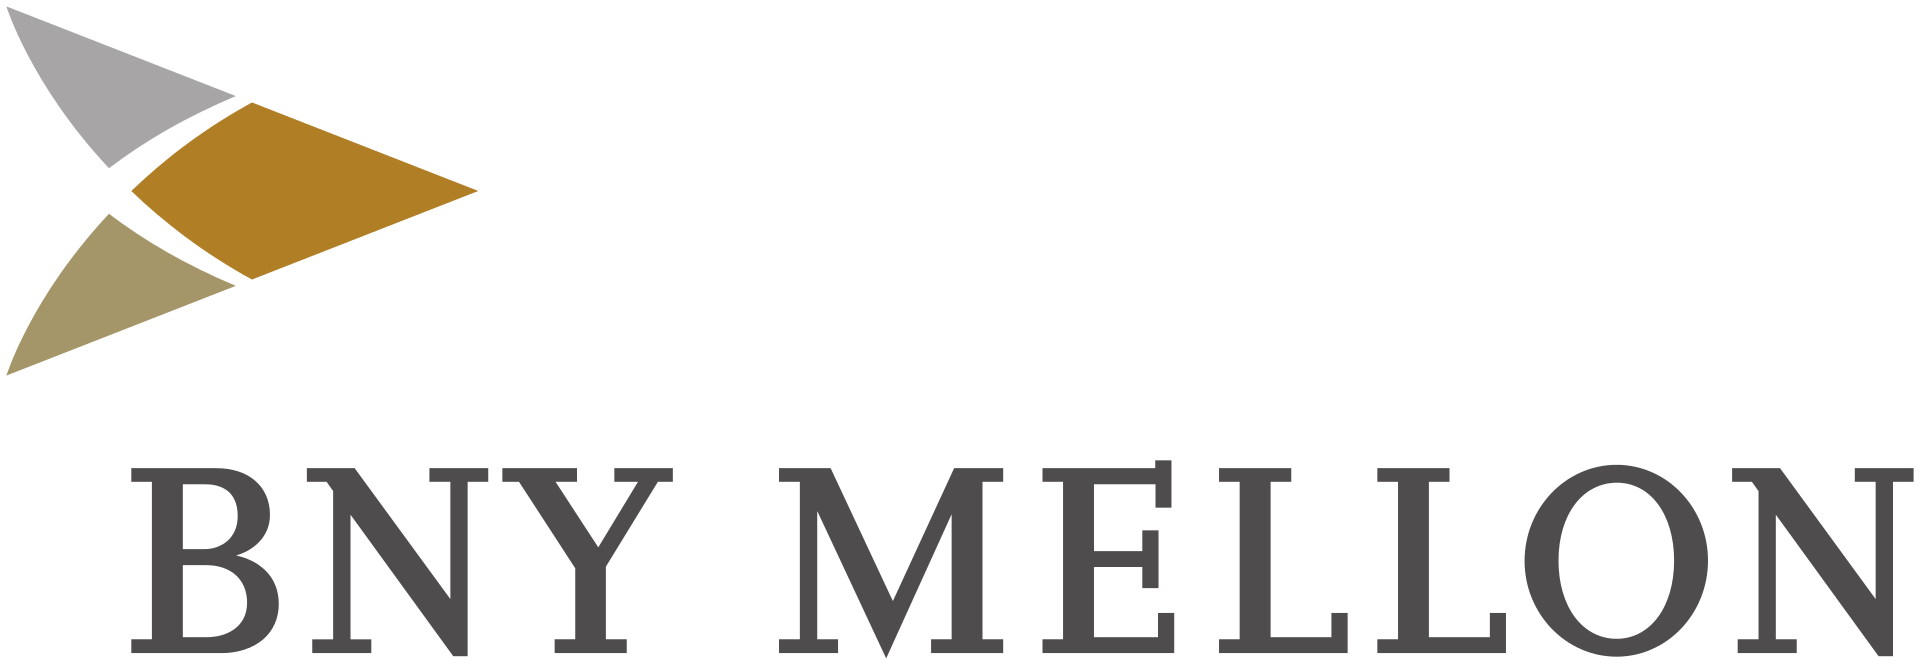 BNY Mellon logo, By BNY Mellon - http://www.bnymellon.com/news/factsheet.pdf, Public Domain, http://en.wikipedia.org/w/index.php?curid=38972378"